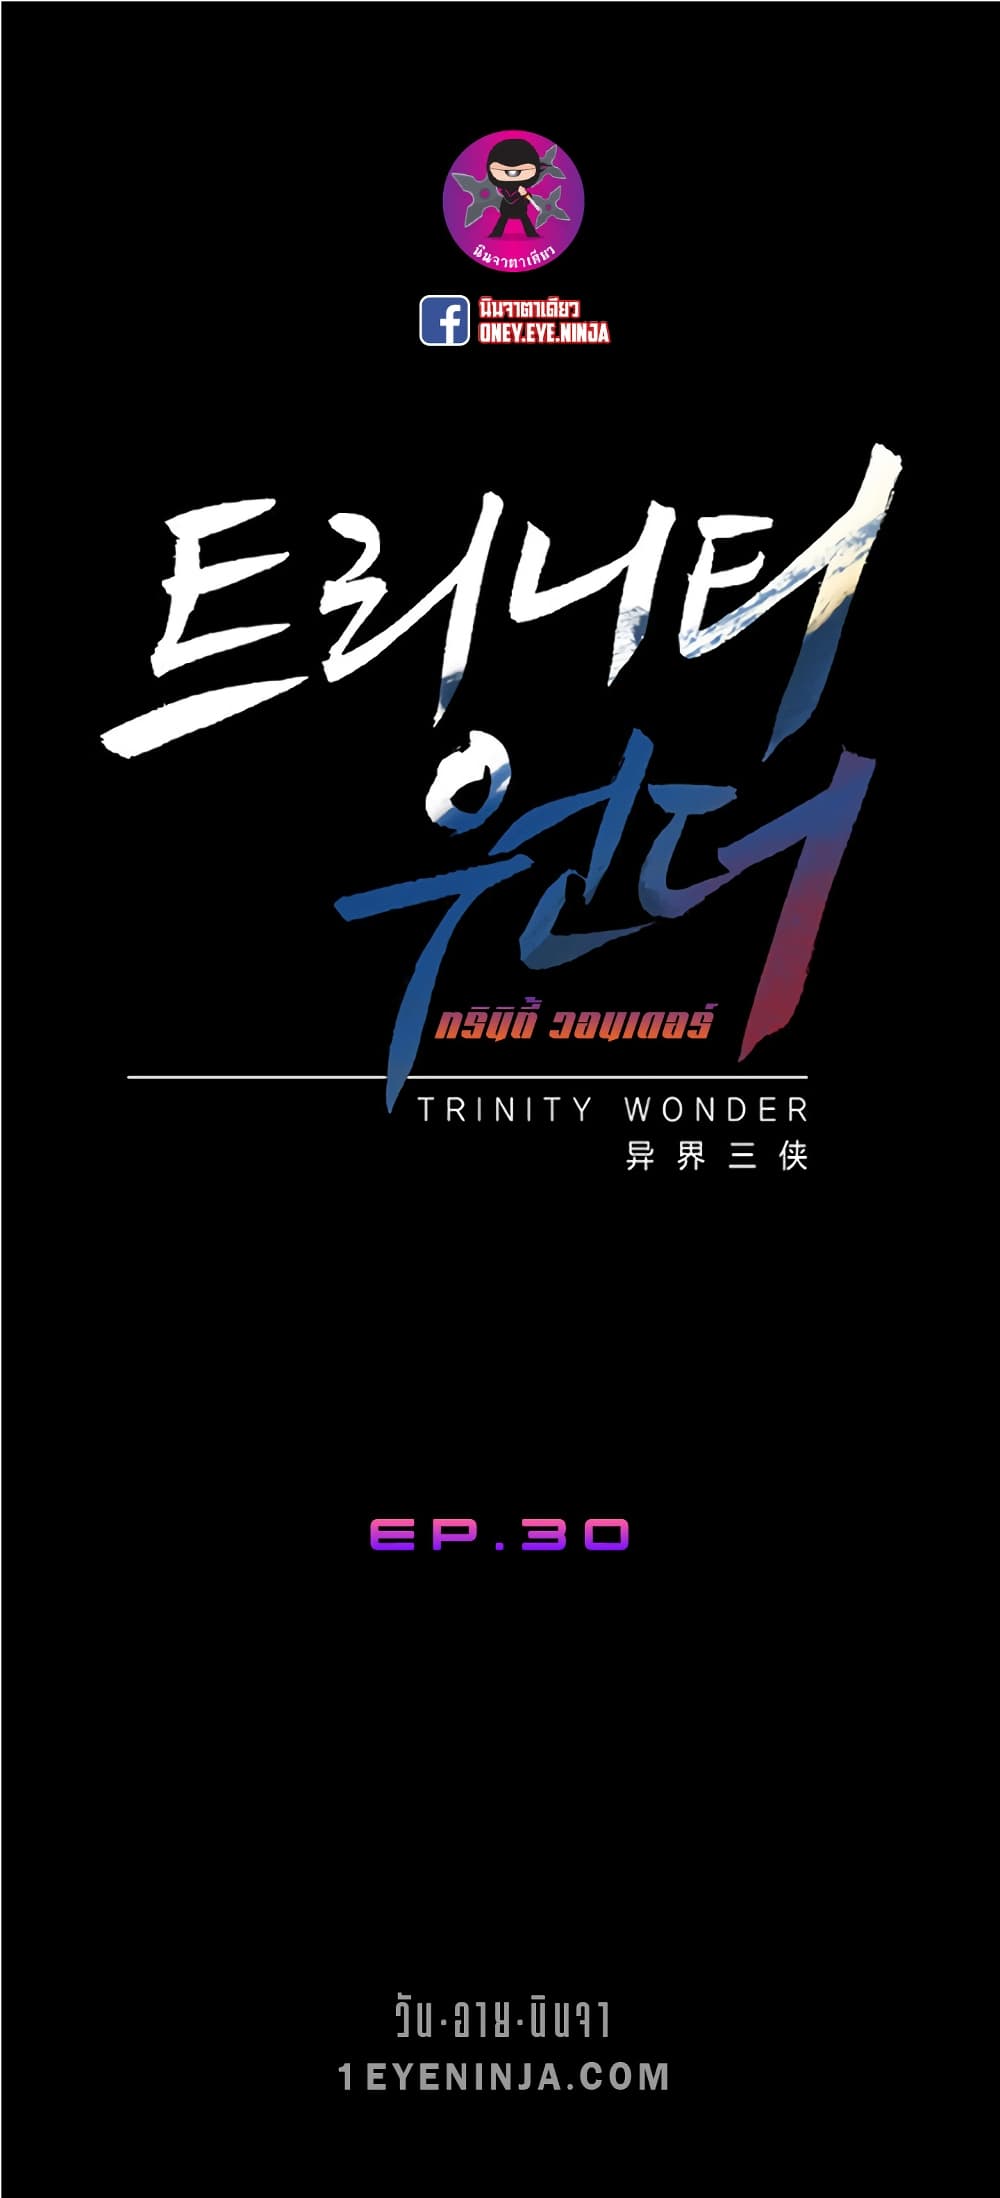 Trinity Wonder 30-30